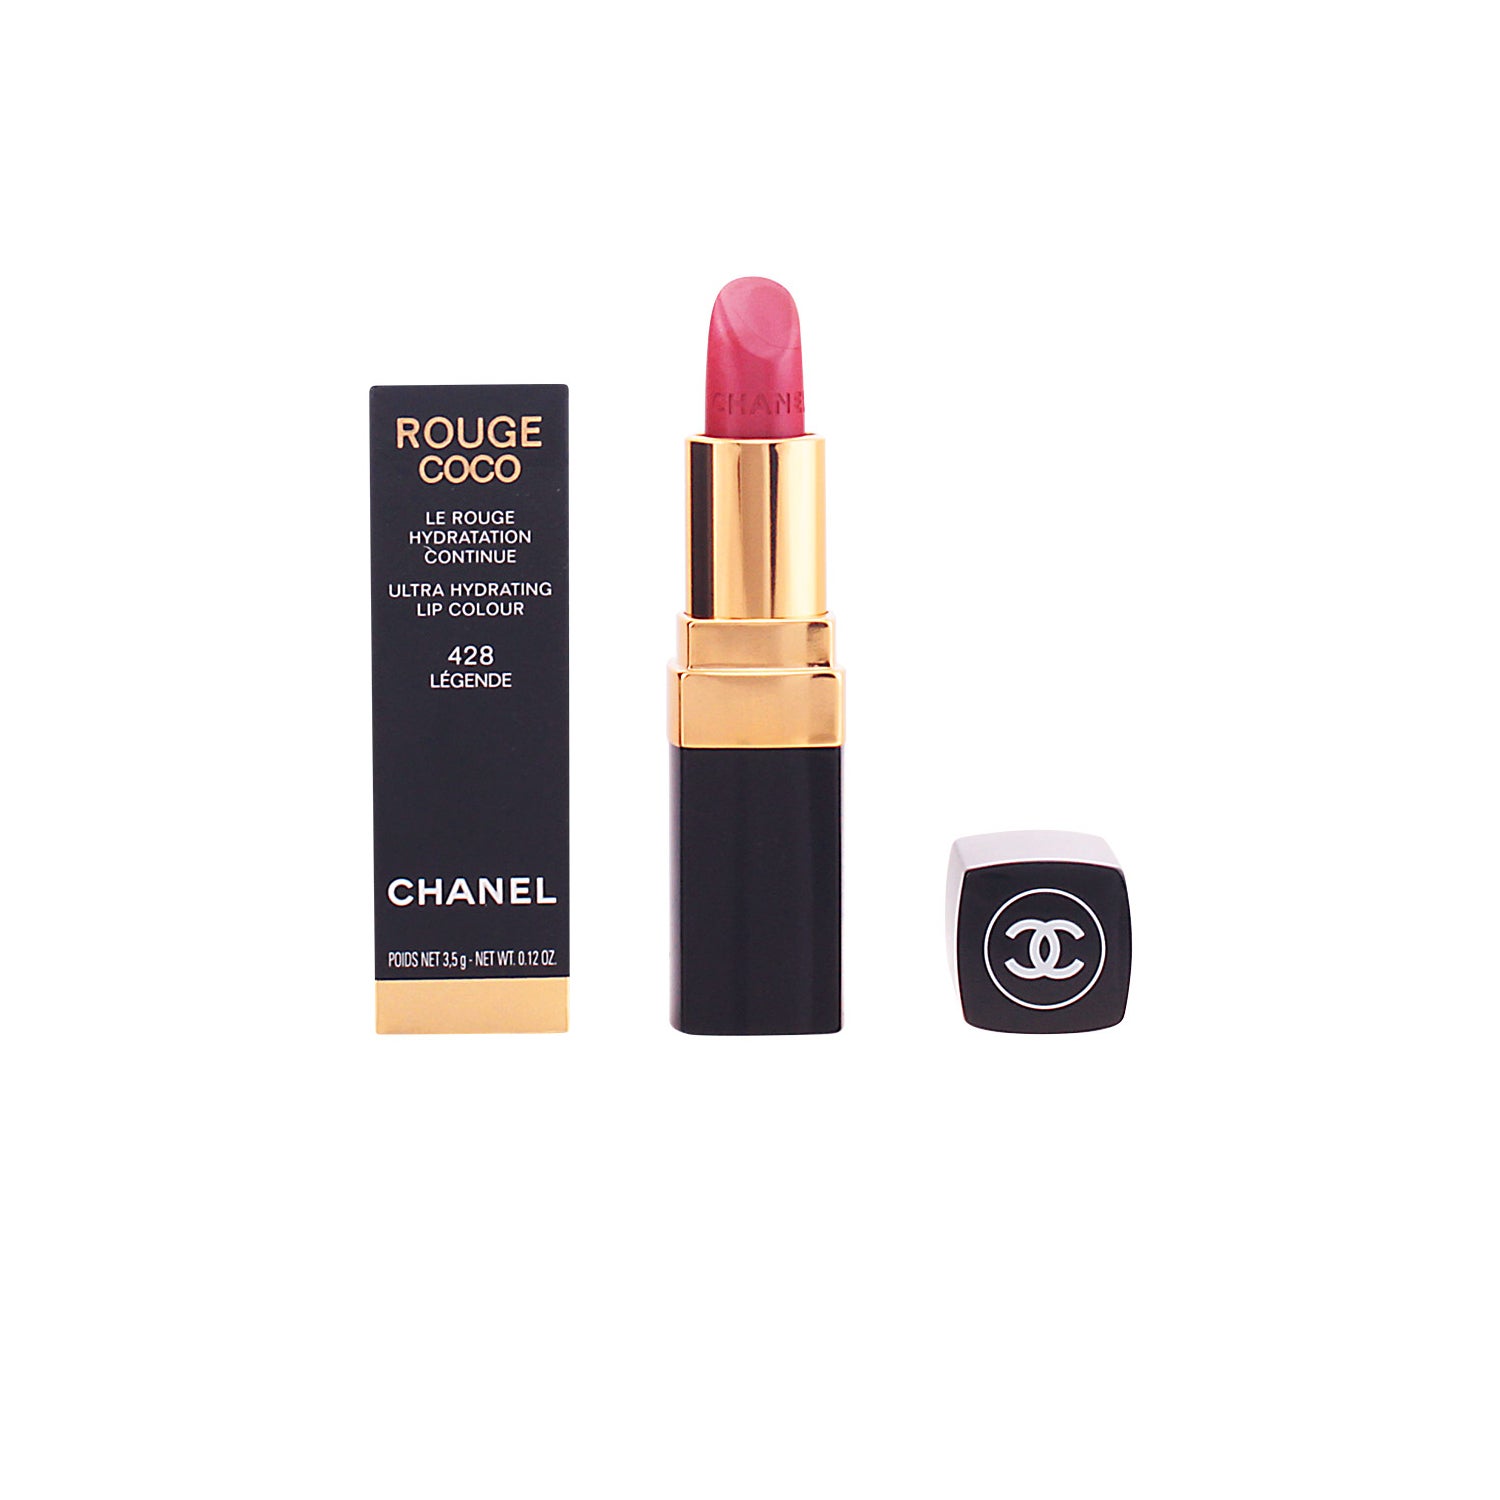 Chanel Rouge Coco Lipstick No. 428 Légende 3,5g